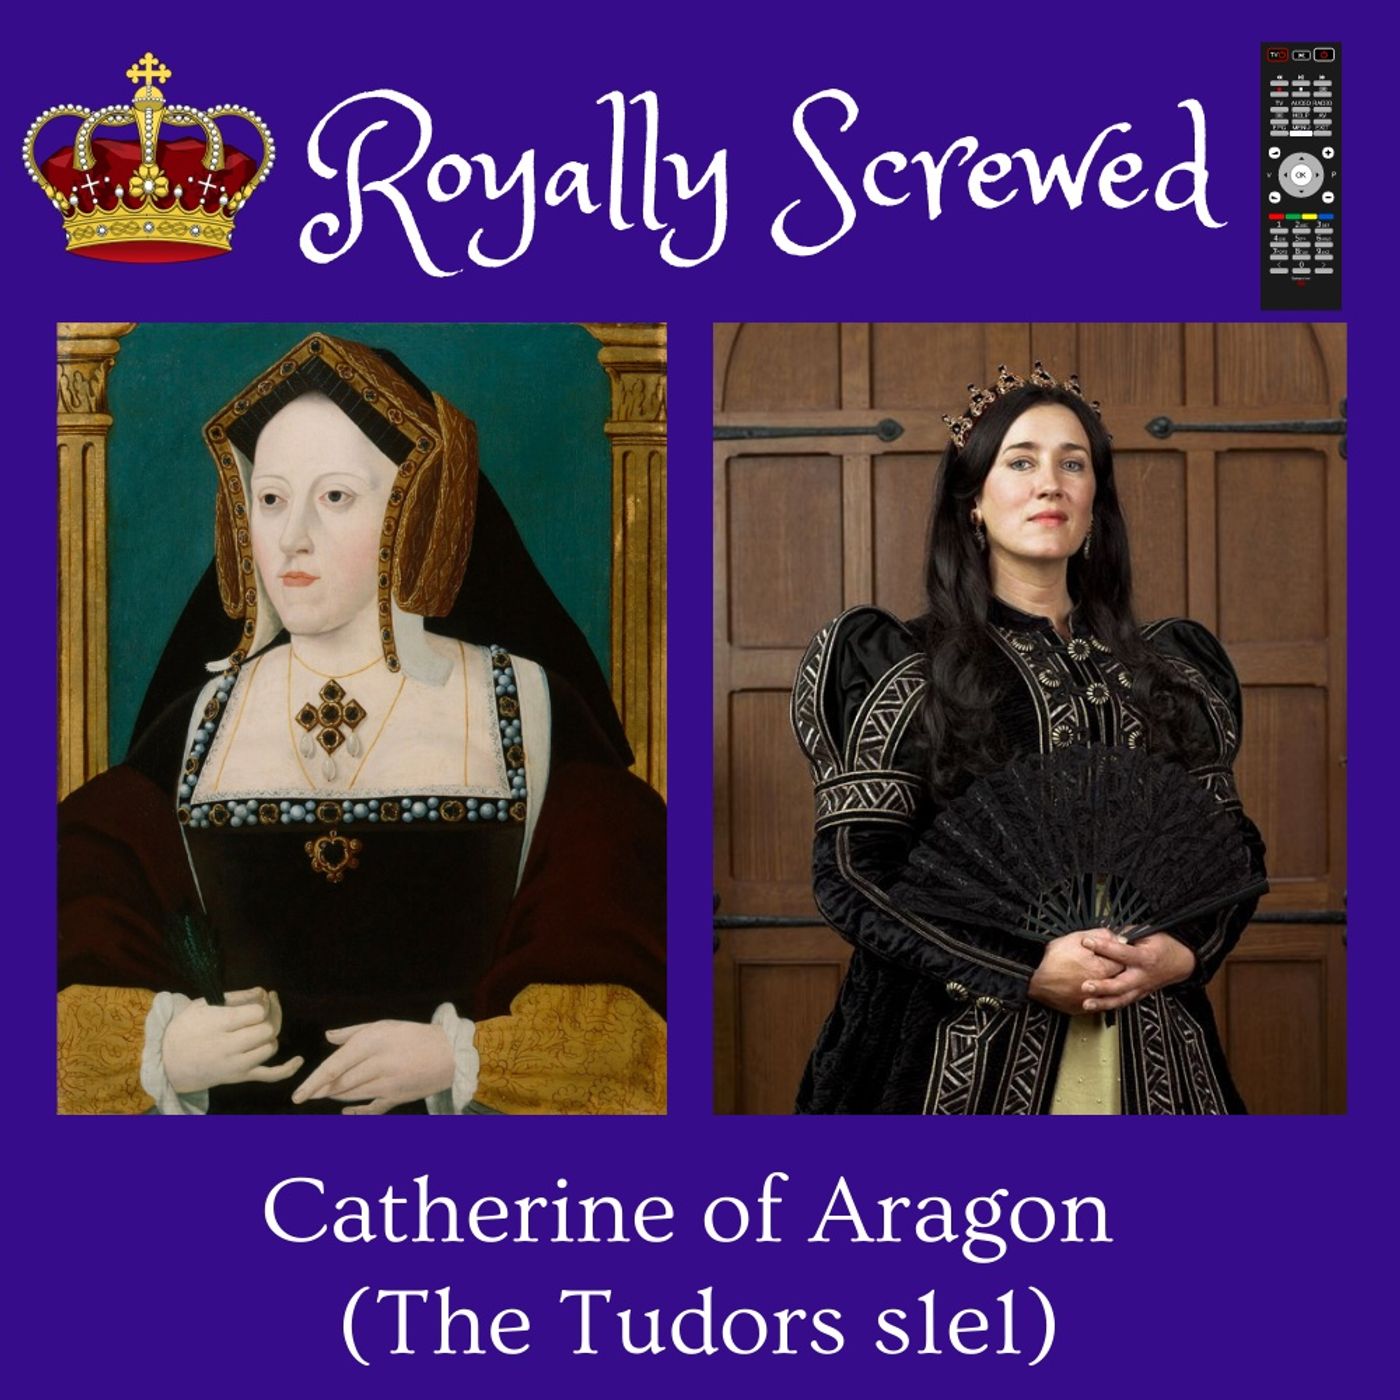 Catherine of Aragon (The Tudors s1e1)